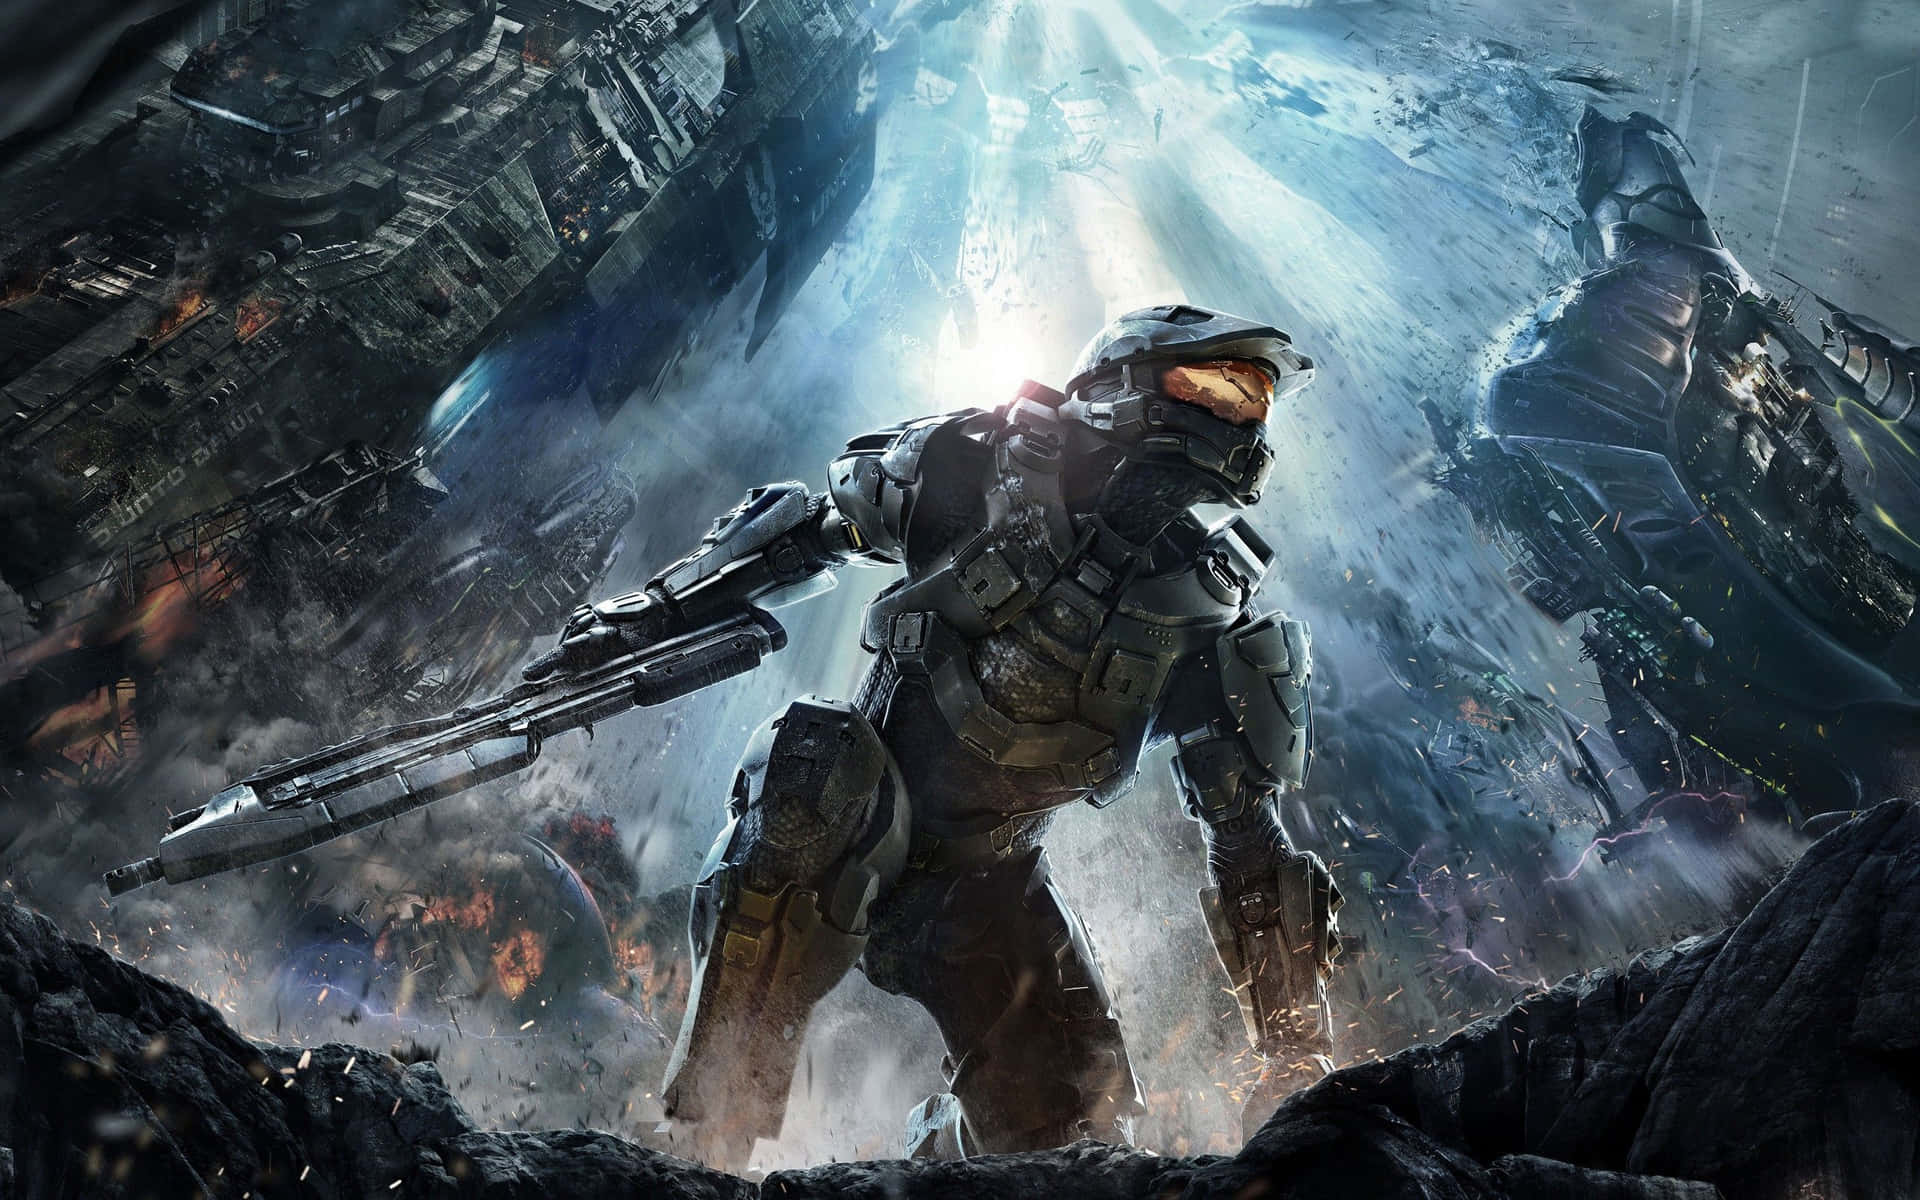 "The Hero We Need - Meet Halo's Master Chief" Wallpaper